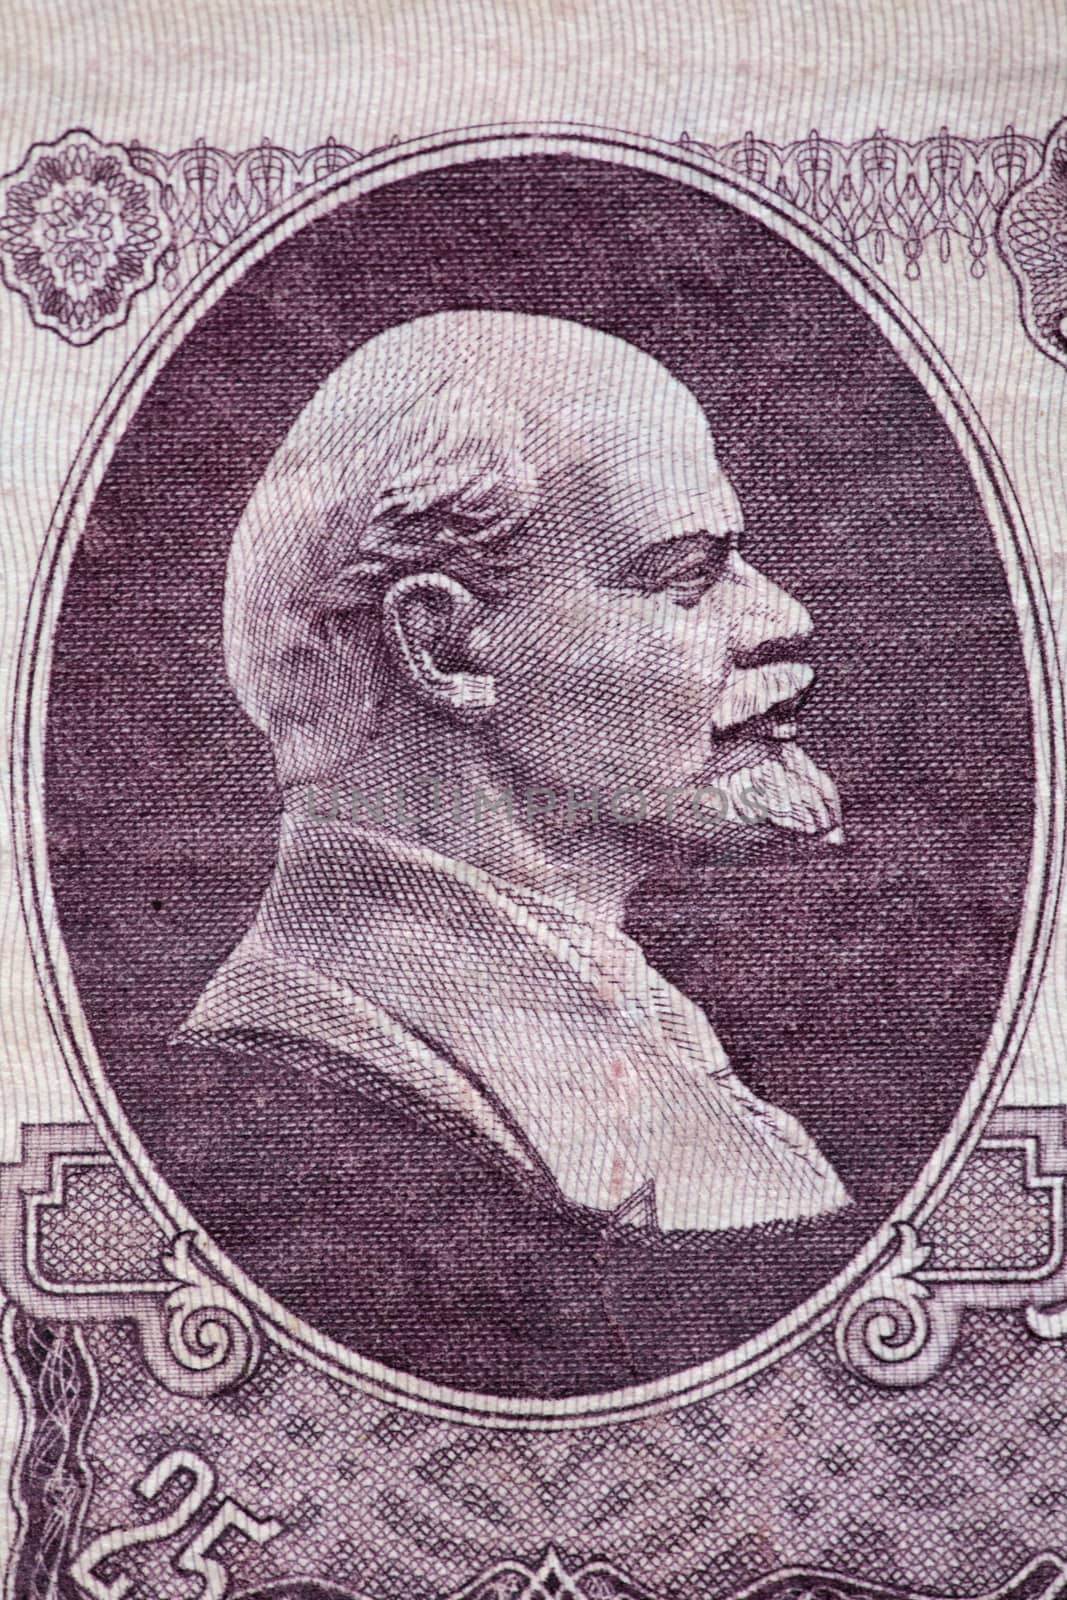 Vladimir Lenin profile portrait on the Soviet banknotes macro shot